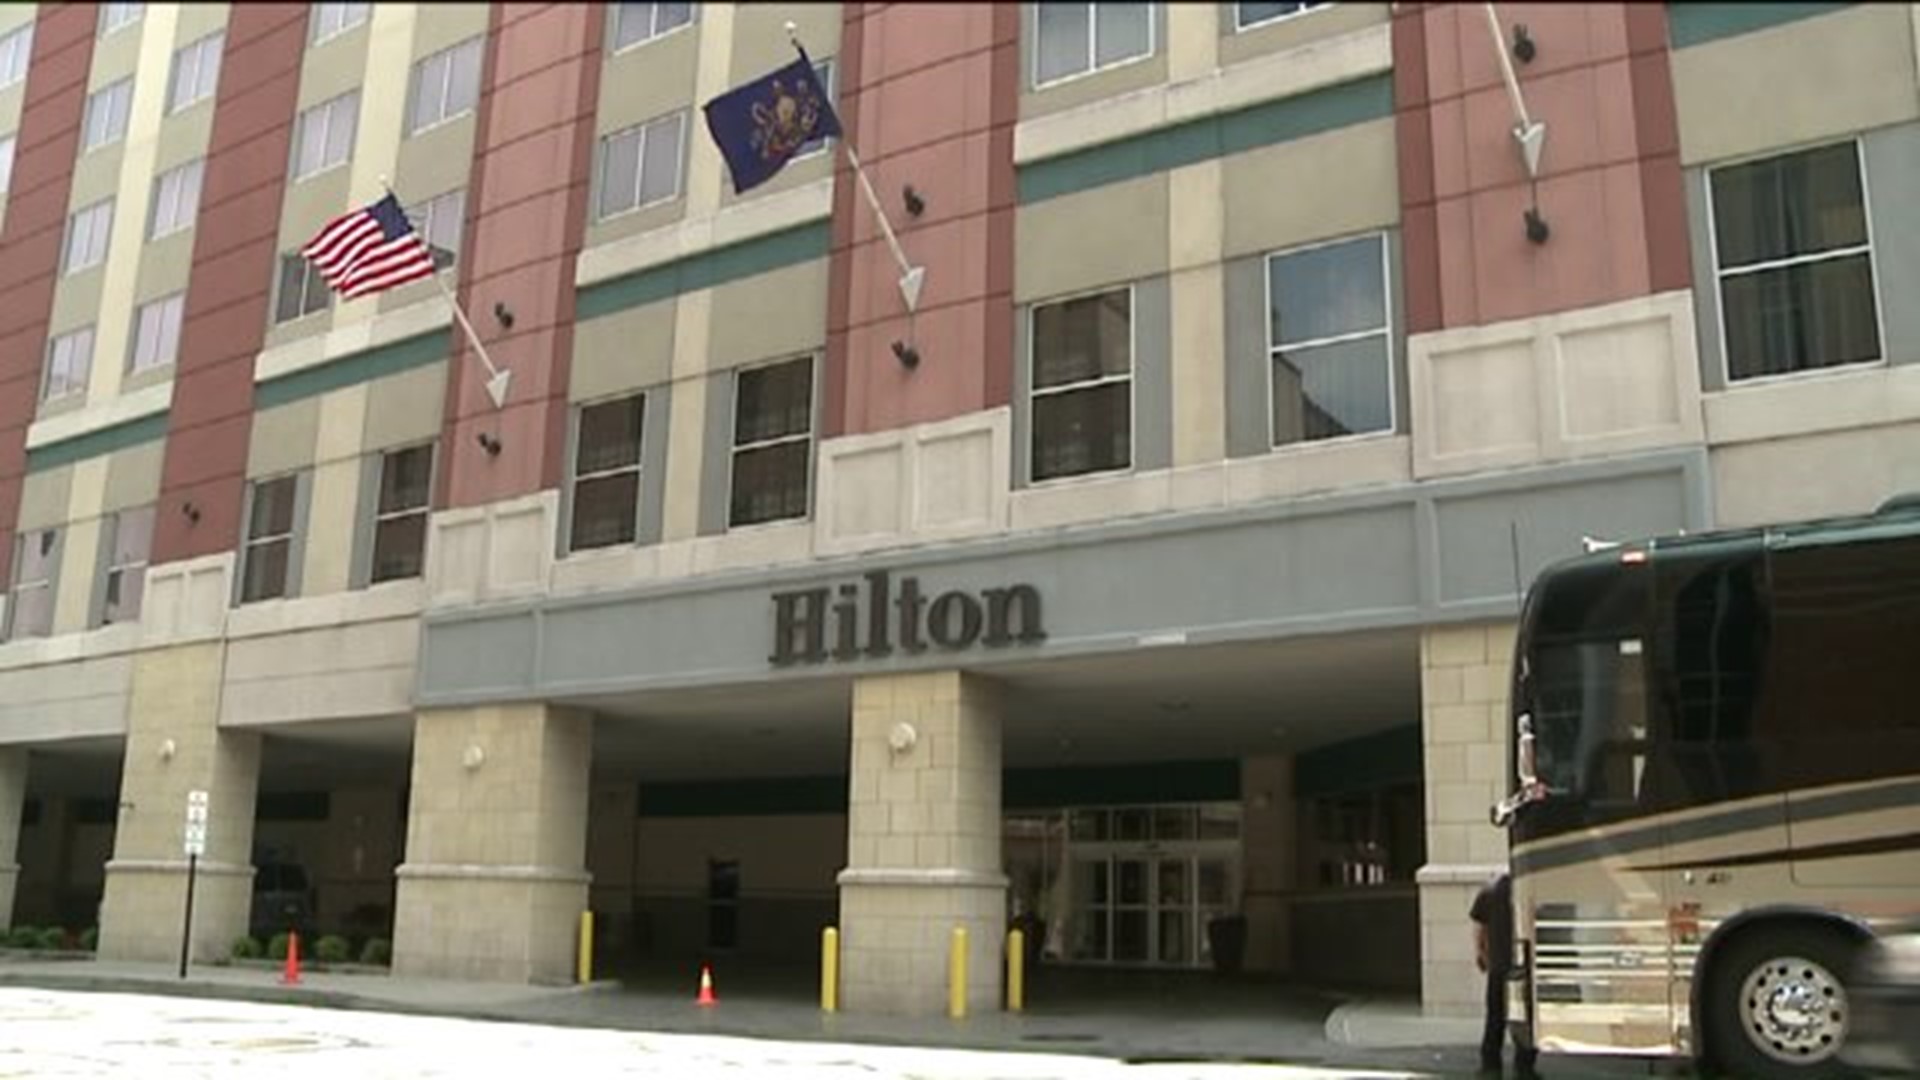 Scranton Hilton up for Sale